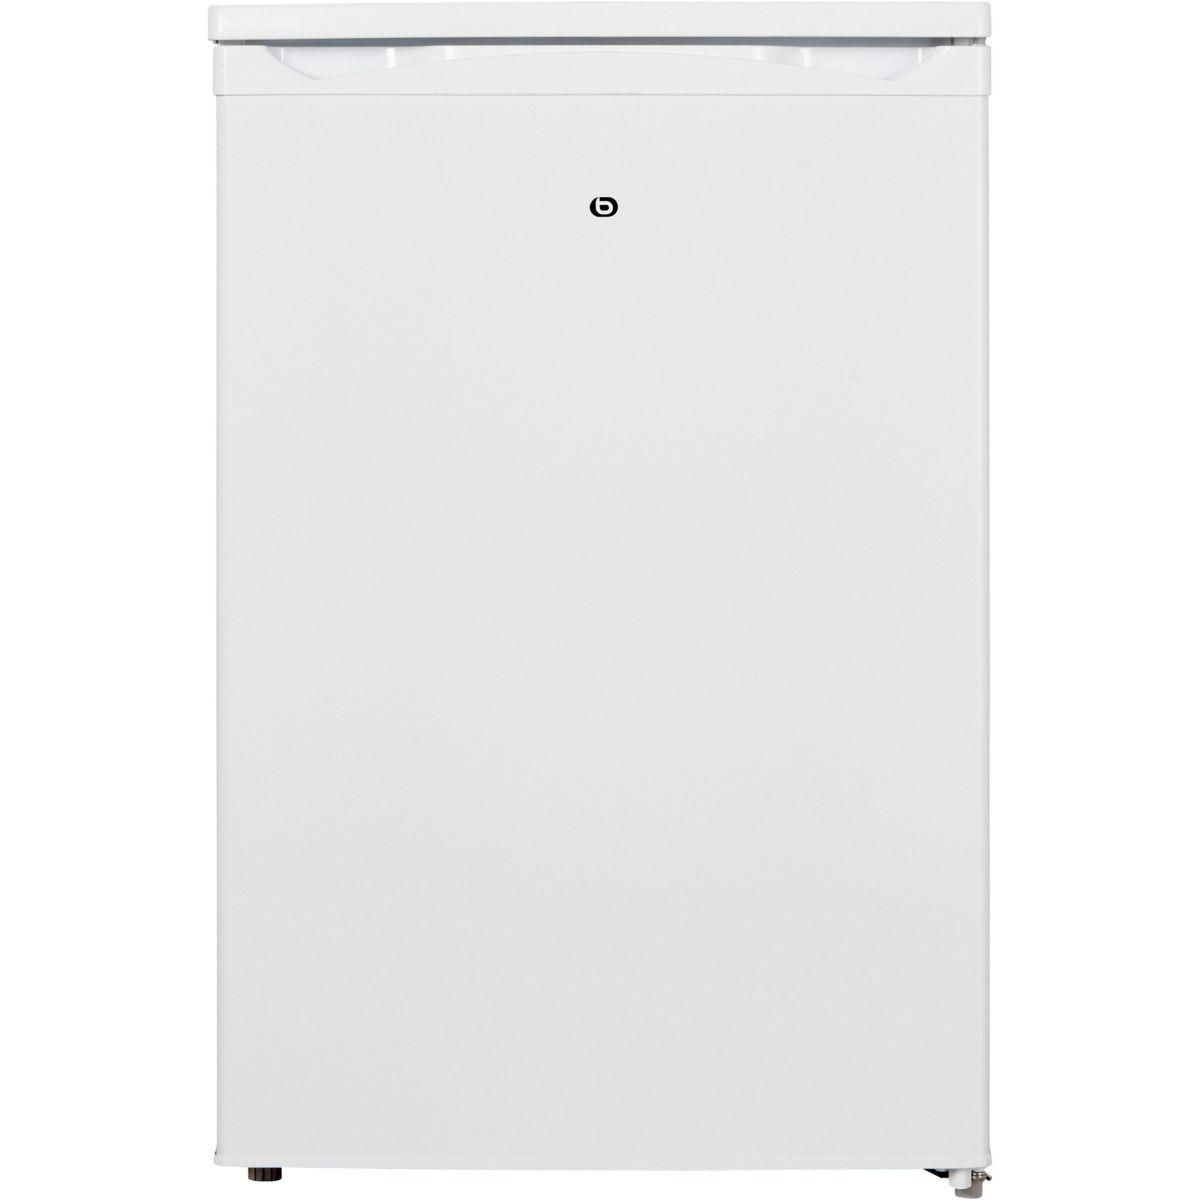 ESSENTIEL B Réfrigérateur top ERT85-55mib4